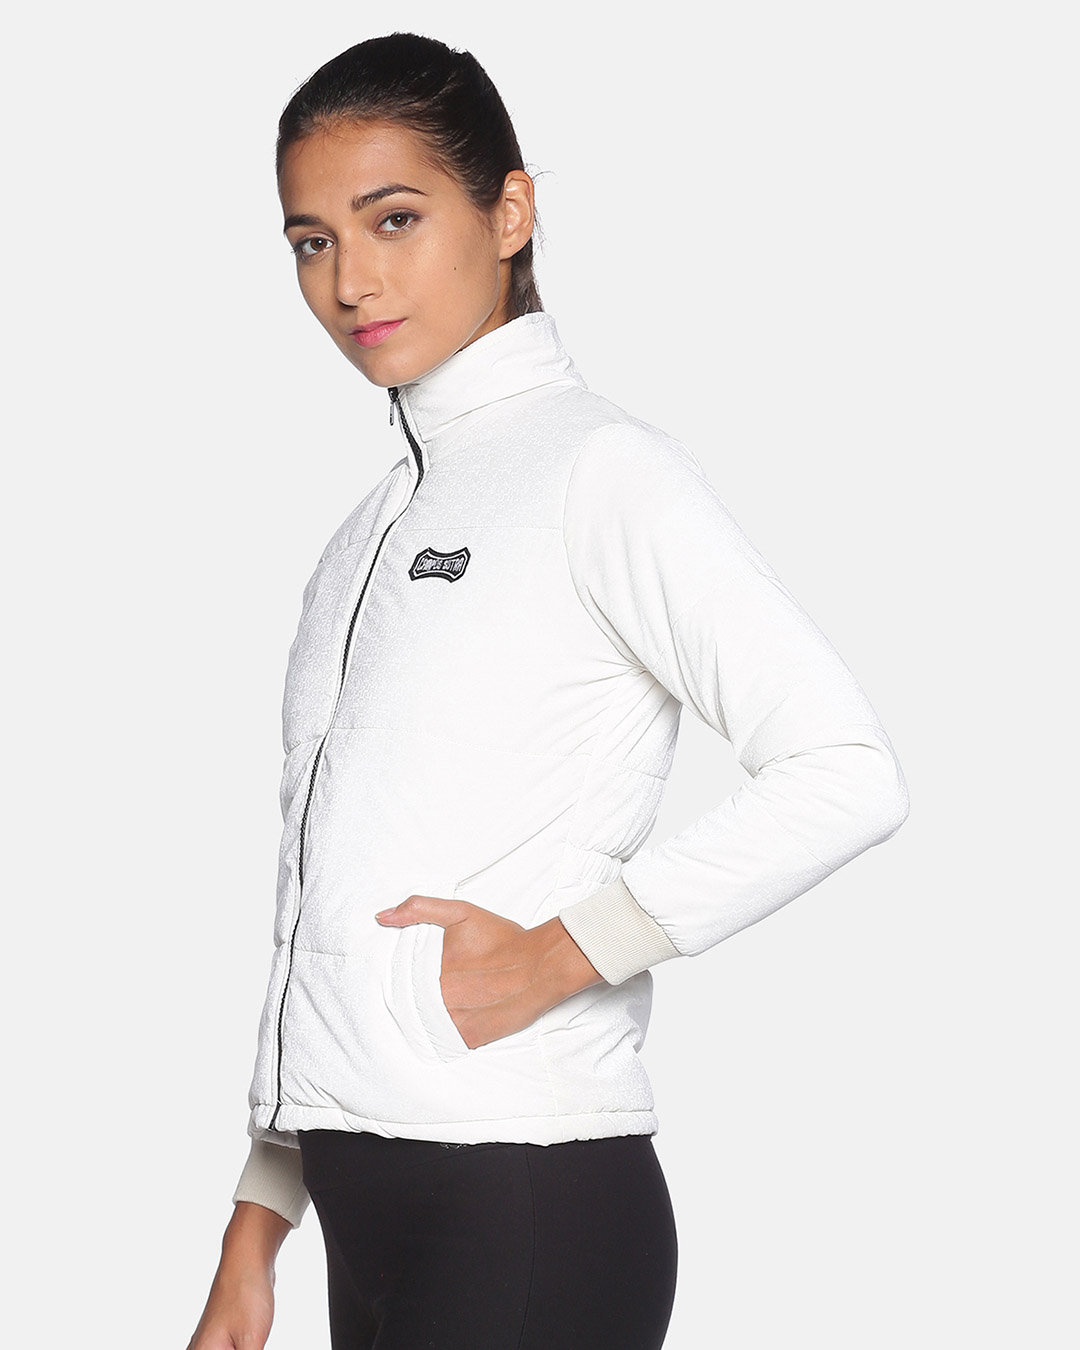 Shop Women's Solid White Stylish Casual Bomber Jacket-Back